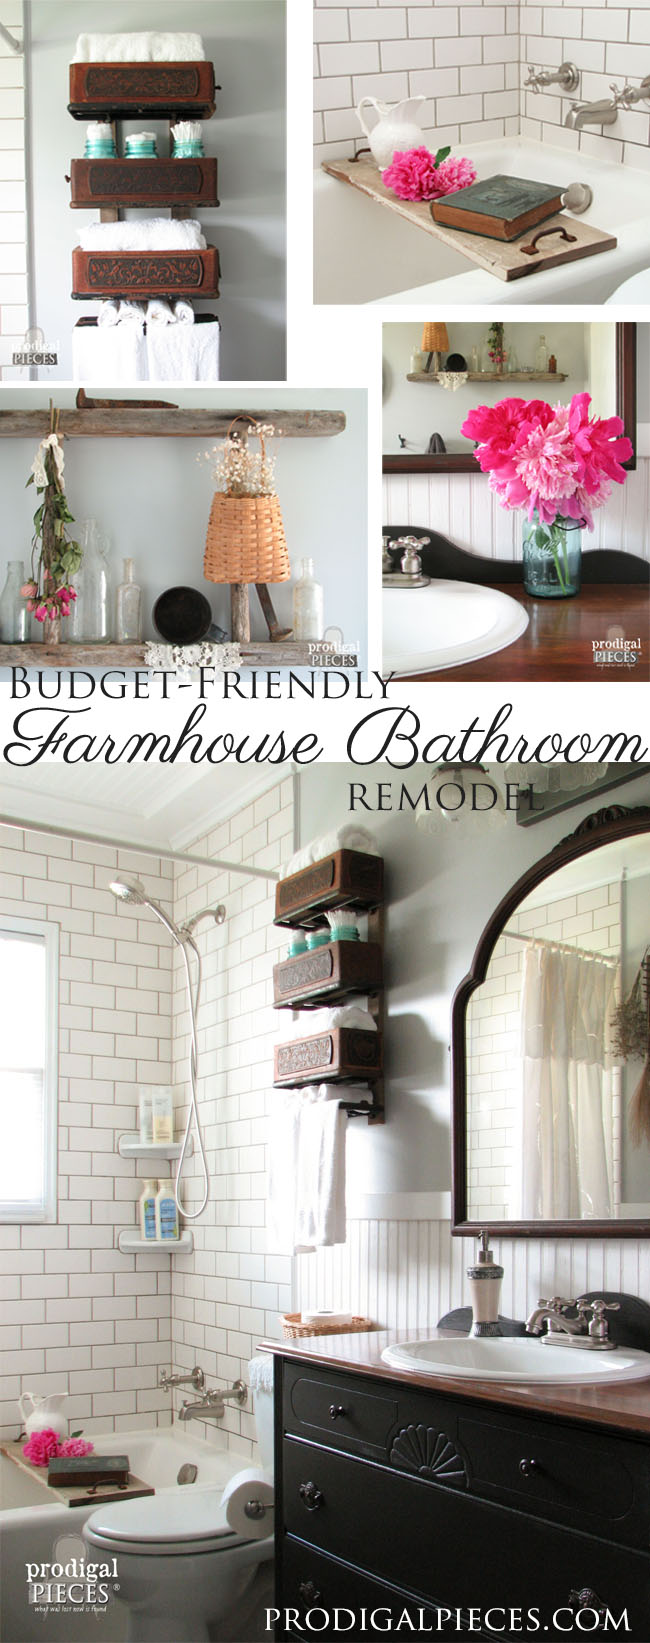 Budget-Friendly DIY Farmhouse Style Bathroom Makeover by Prodigal Pieces www.prodigalpieces.com #prodigalpieces